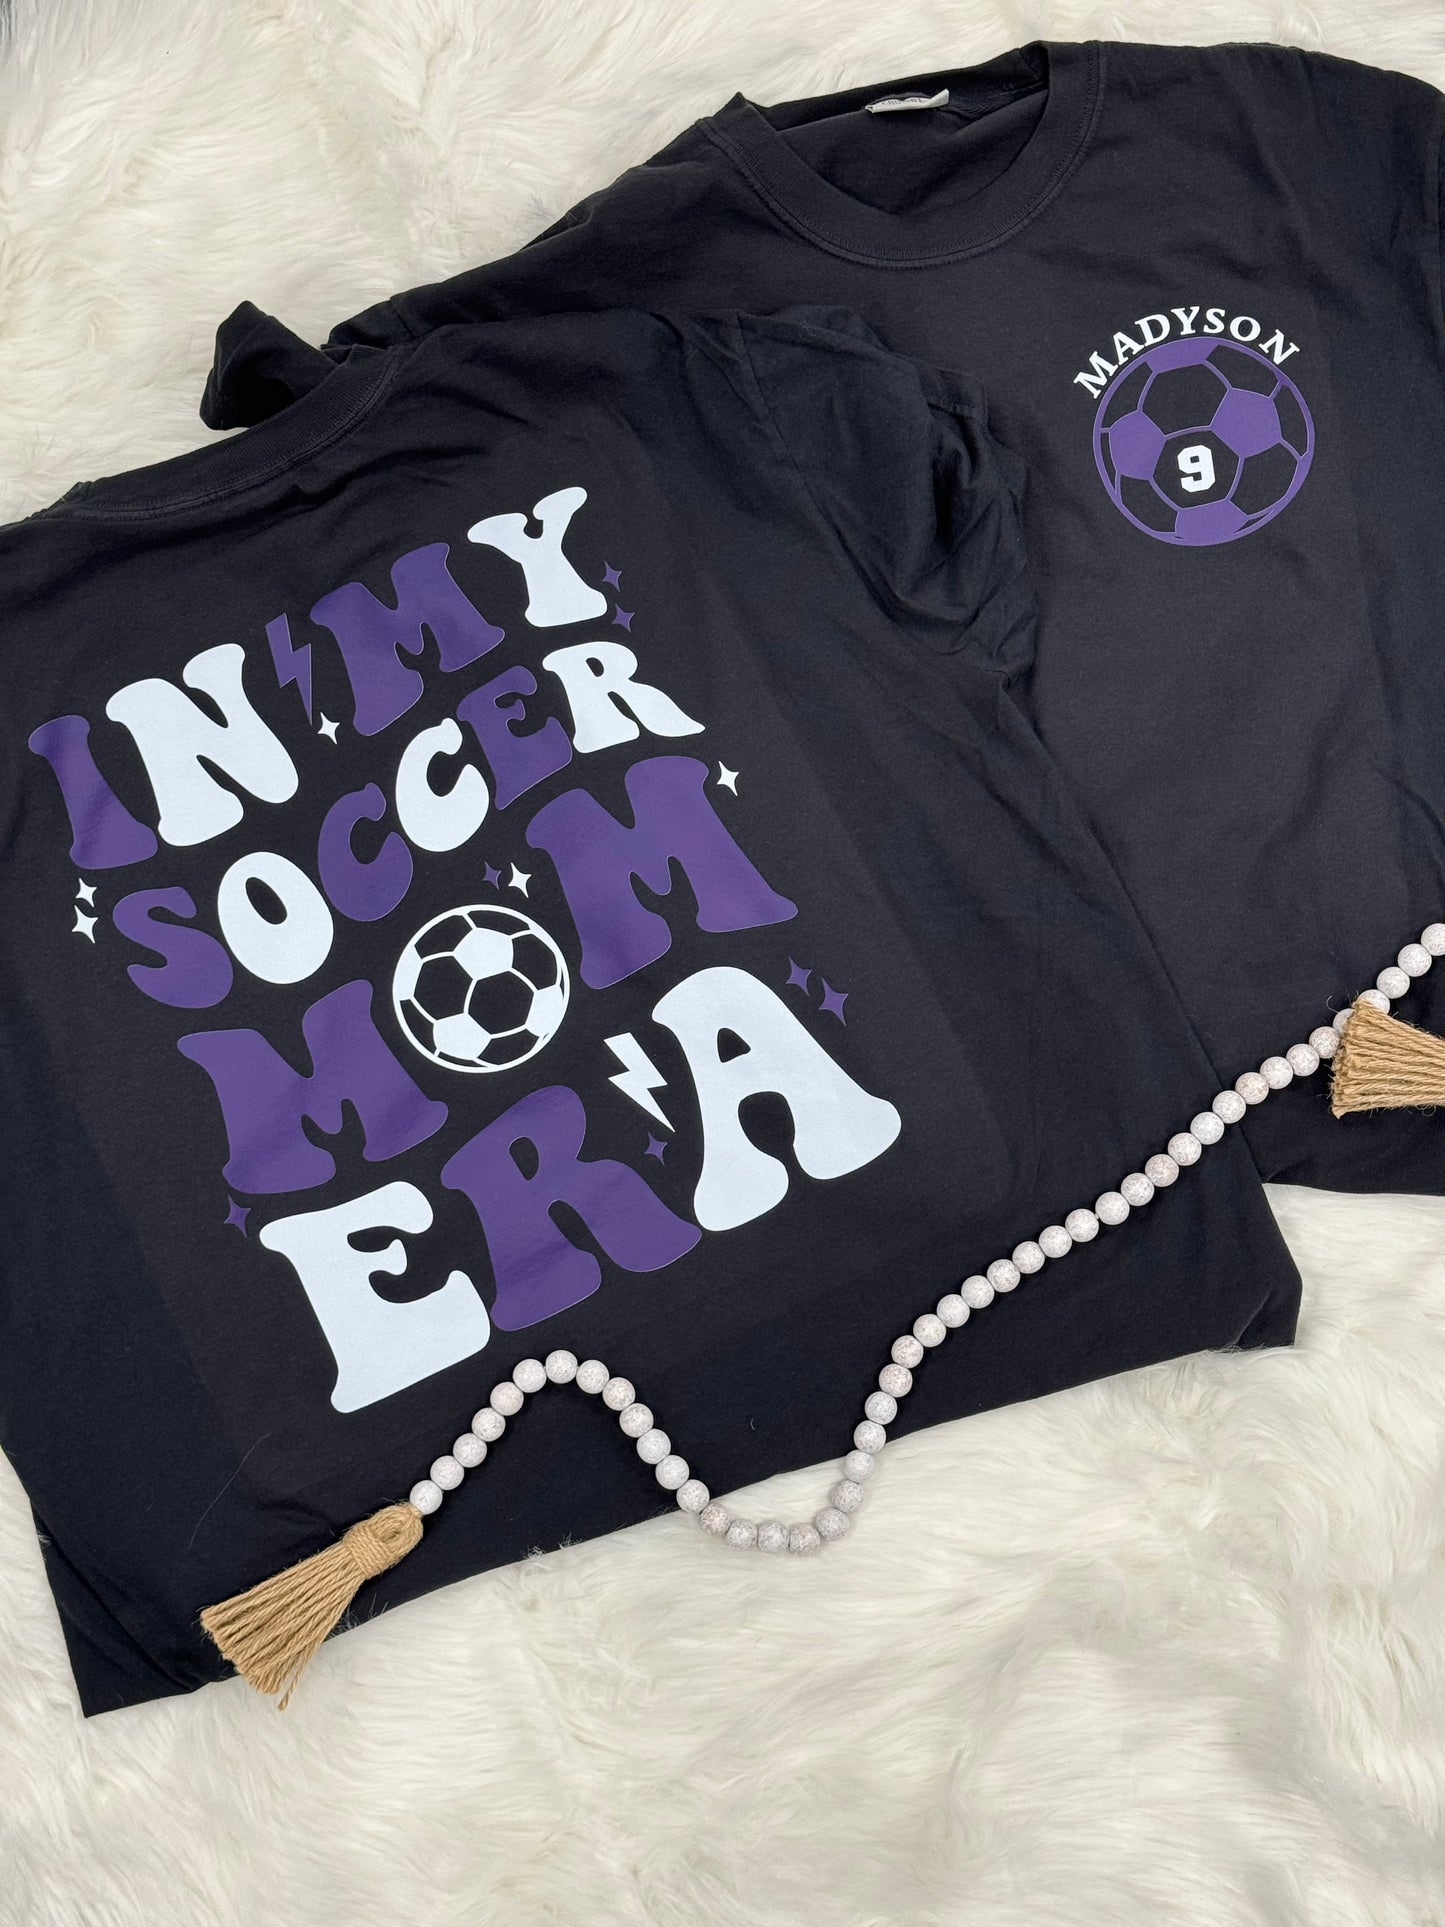 Soccer mom T-Shirt